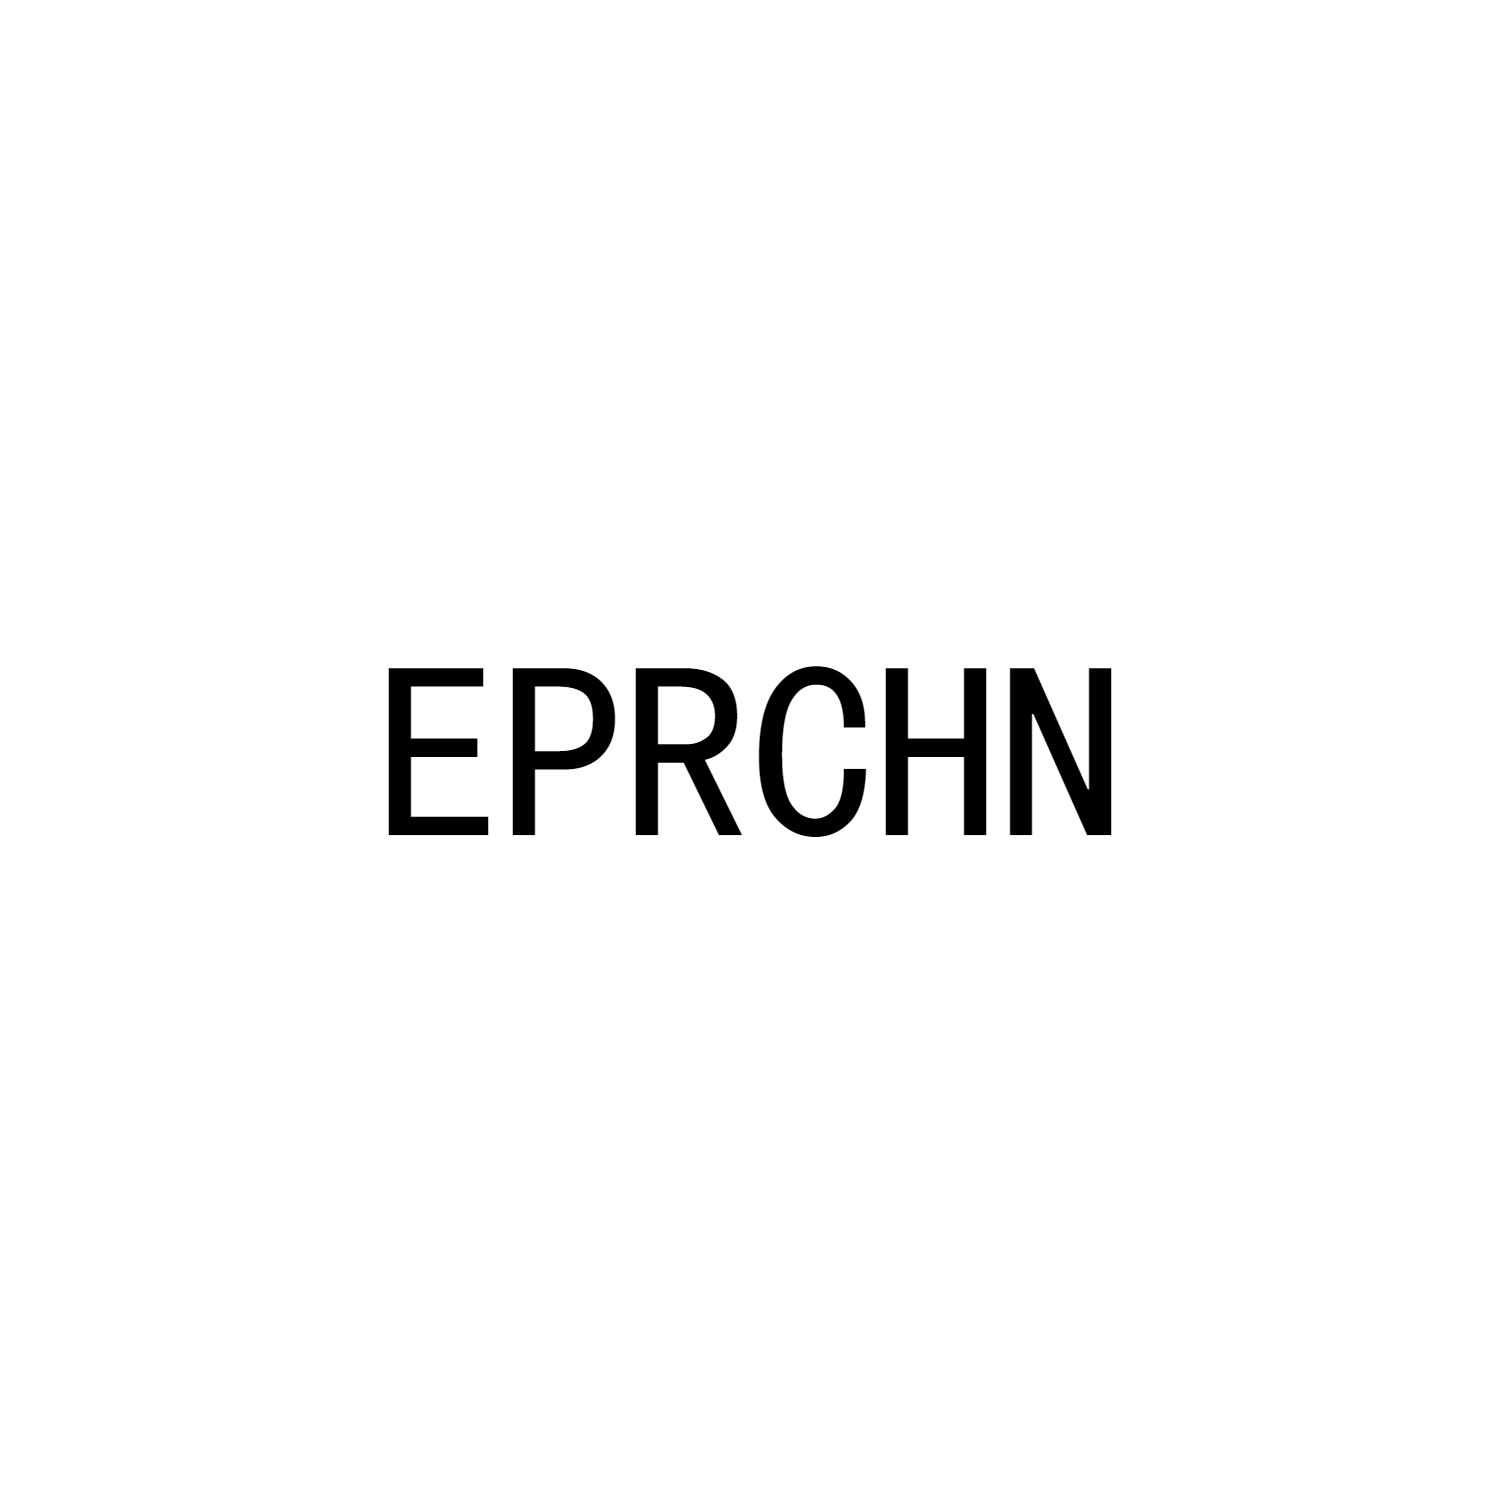 EPRCHN